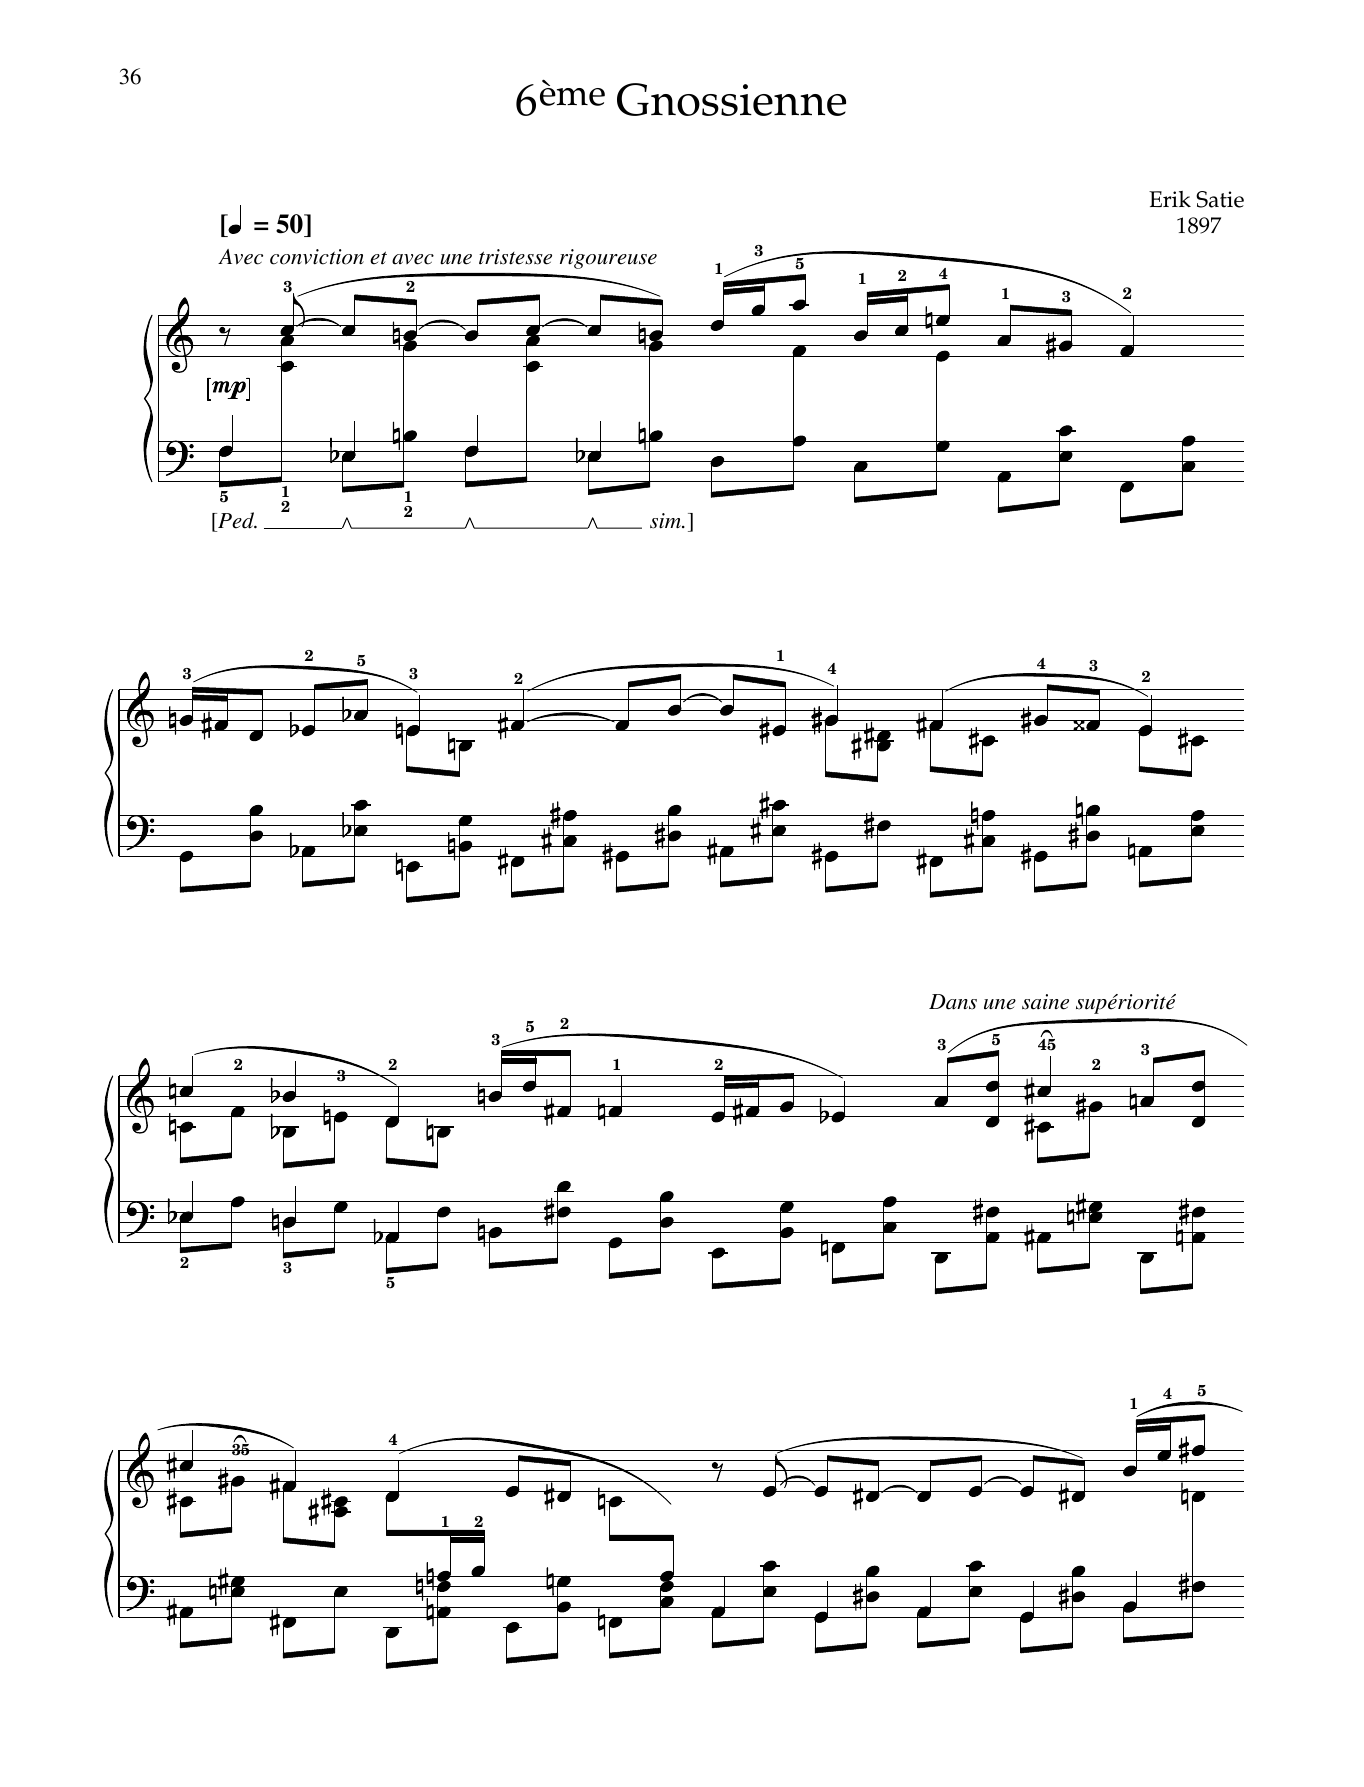 Erik Satie 6ème Gnossienne Sheet Music Notes & Chords for Piano Solo - Download or Print PDF